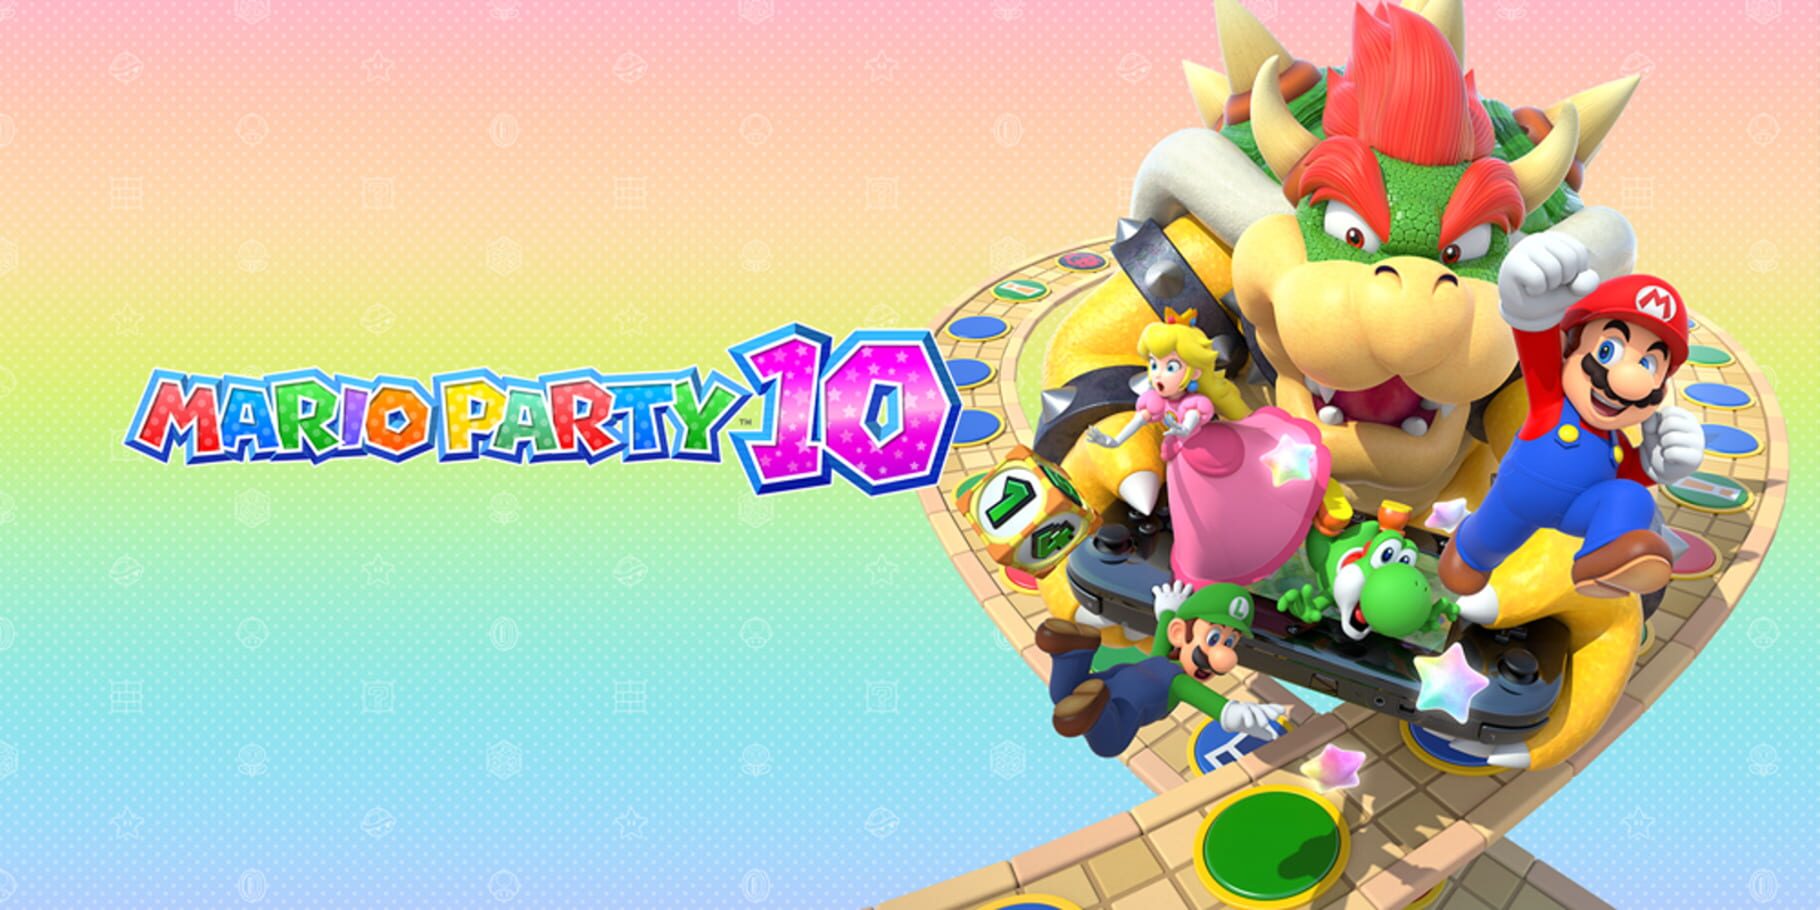 Artwork for Mario Party 10